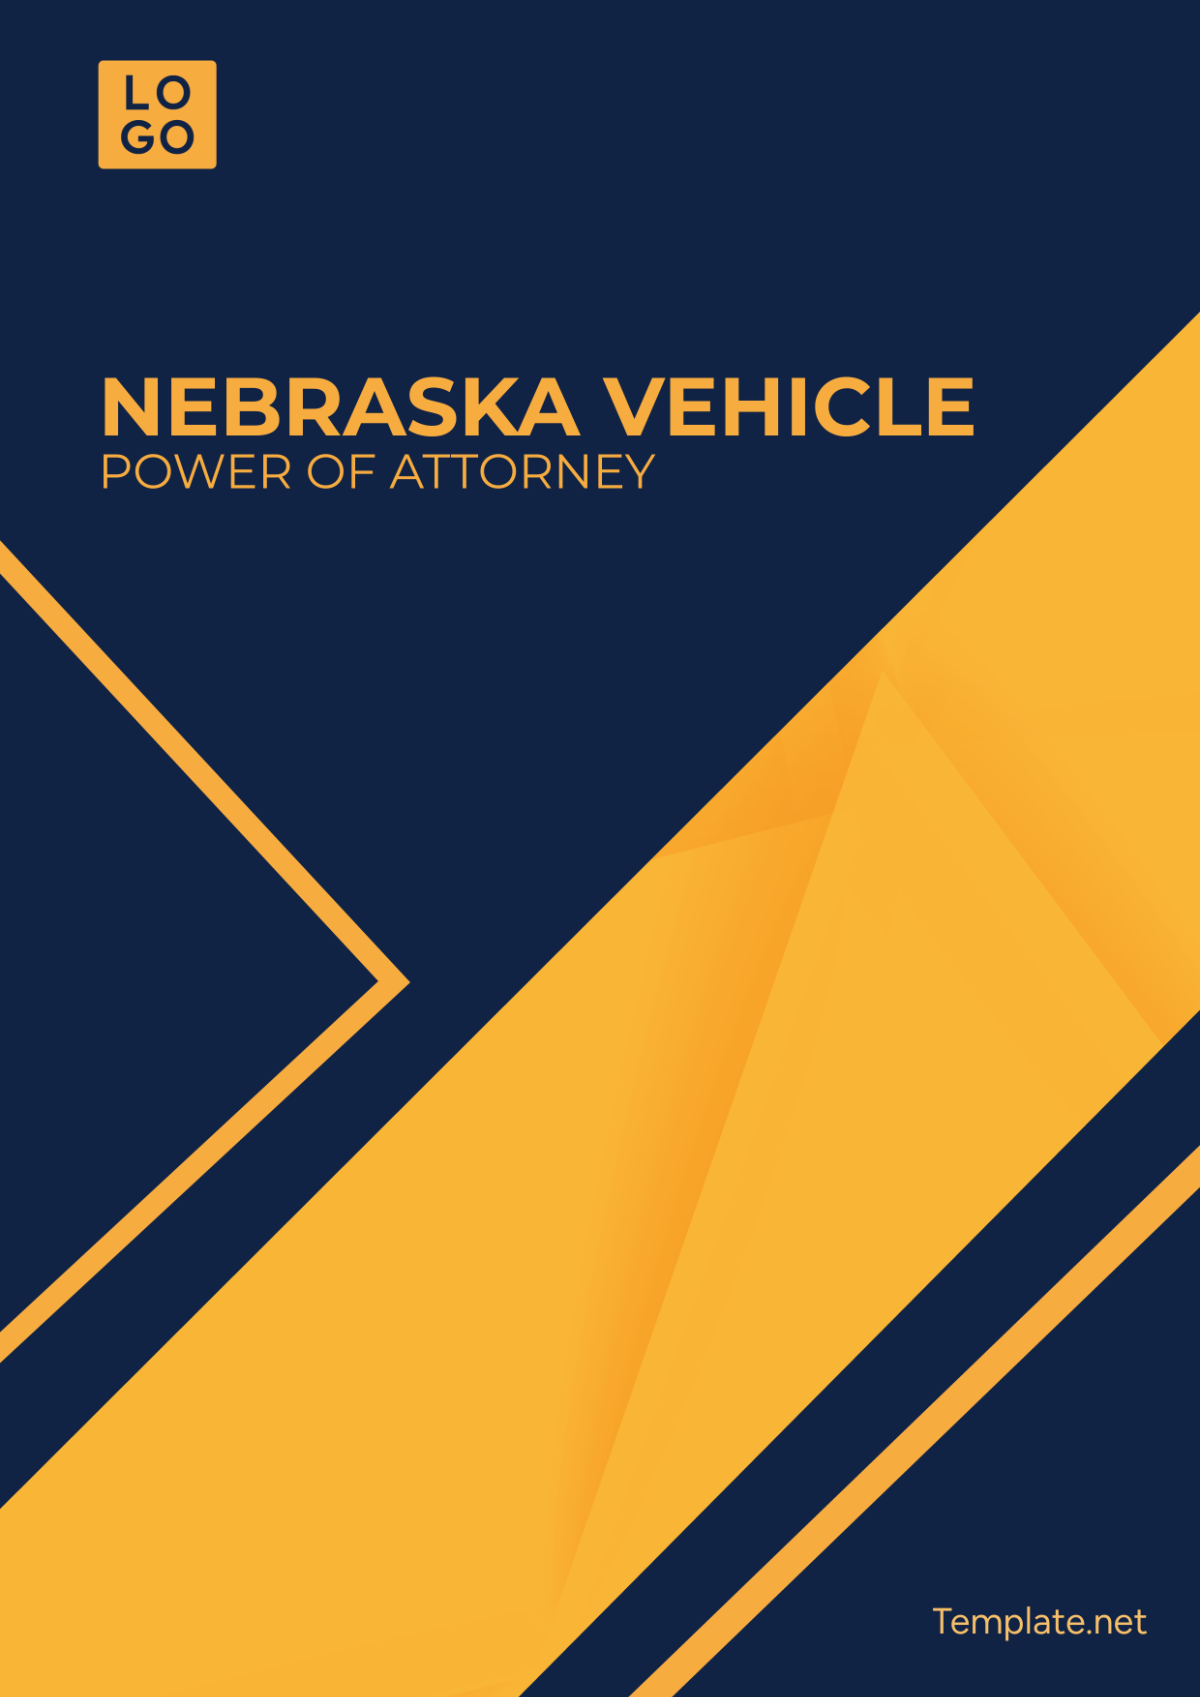 Nebraska Vehicle Power of Attorney Template